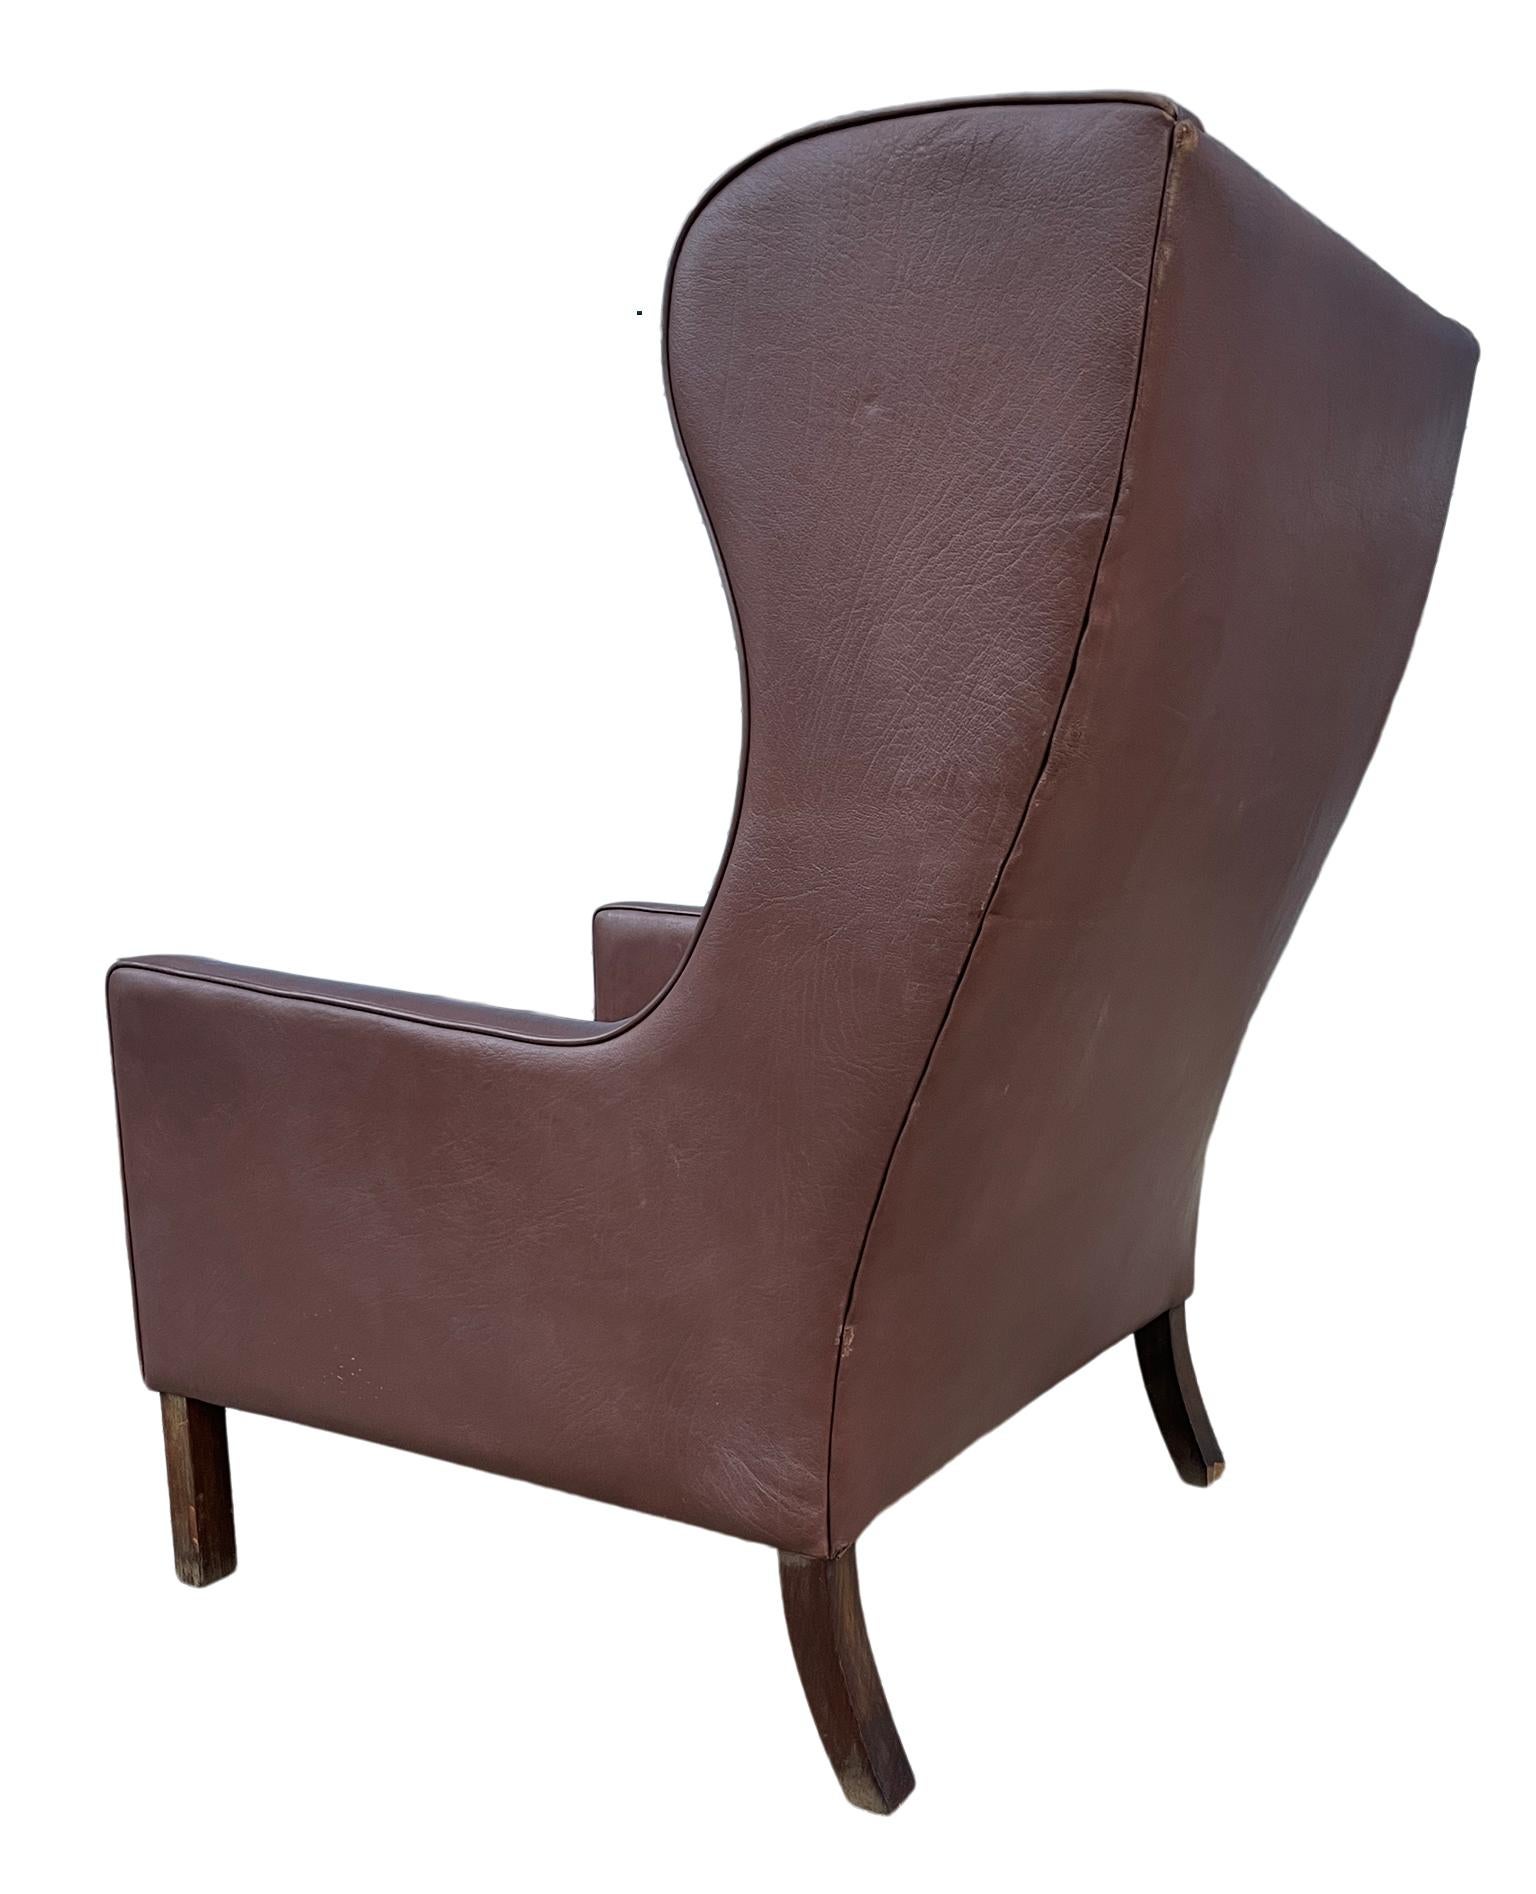 Midcentury Danish Modern Wingback Leather Chair by Børge Mogensen 1